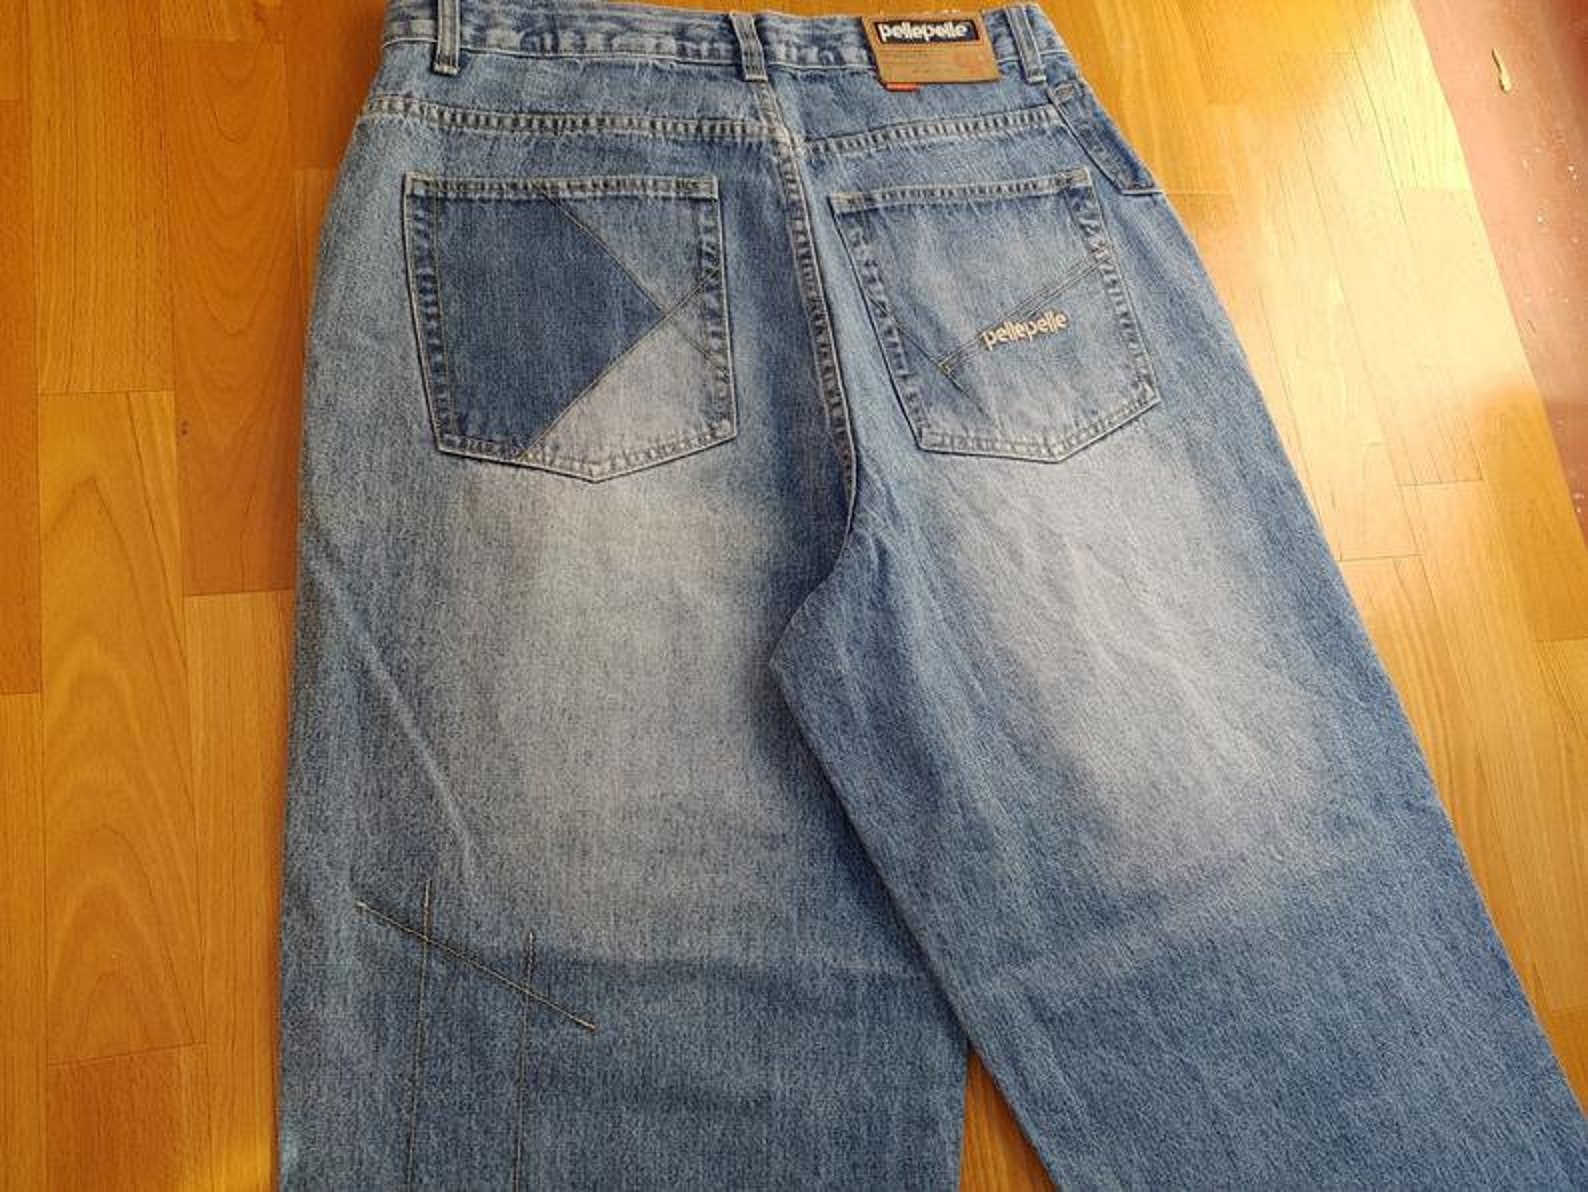 Pelle Pelle jeans old school blue baggy jeans vintage 90s | Etsy